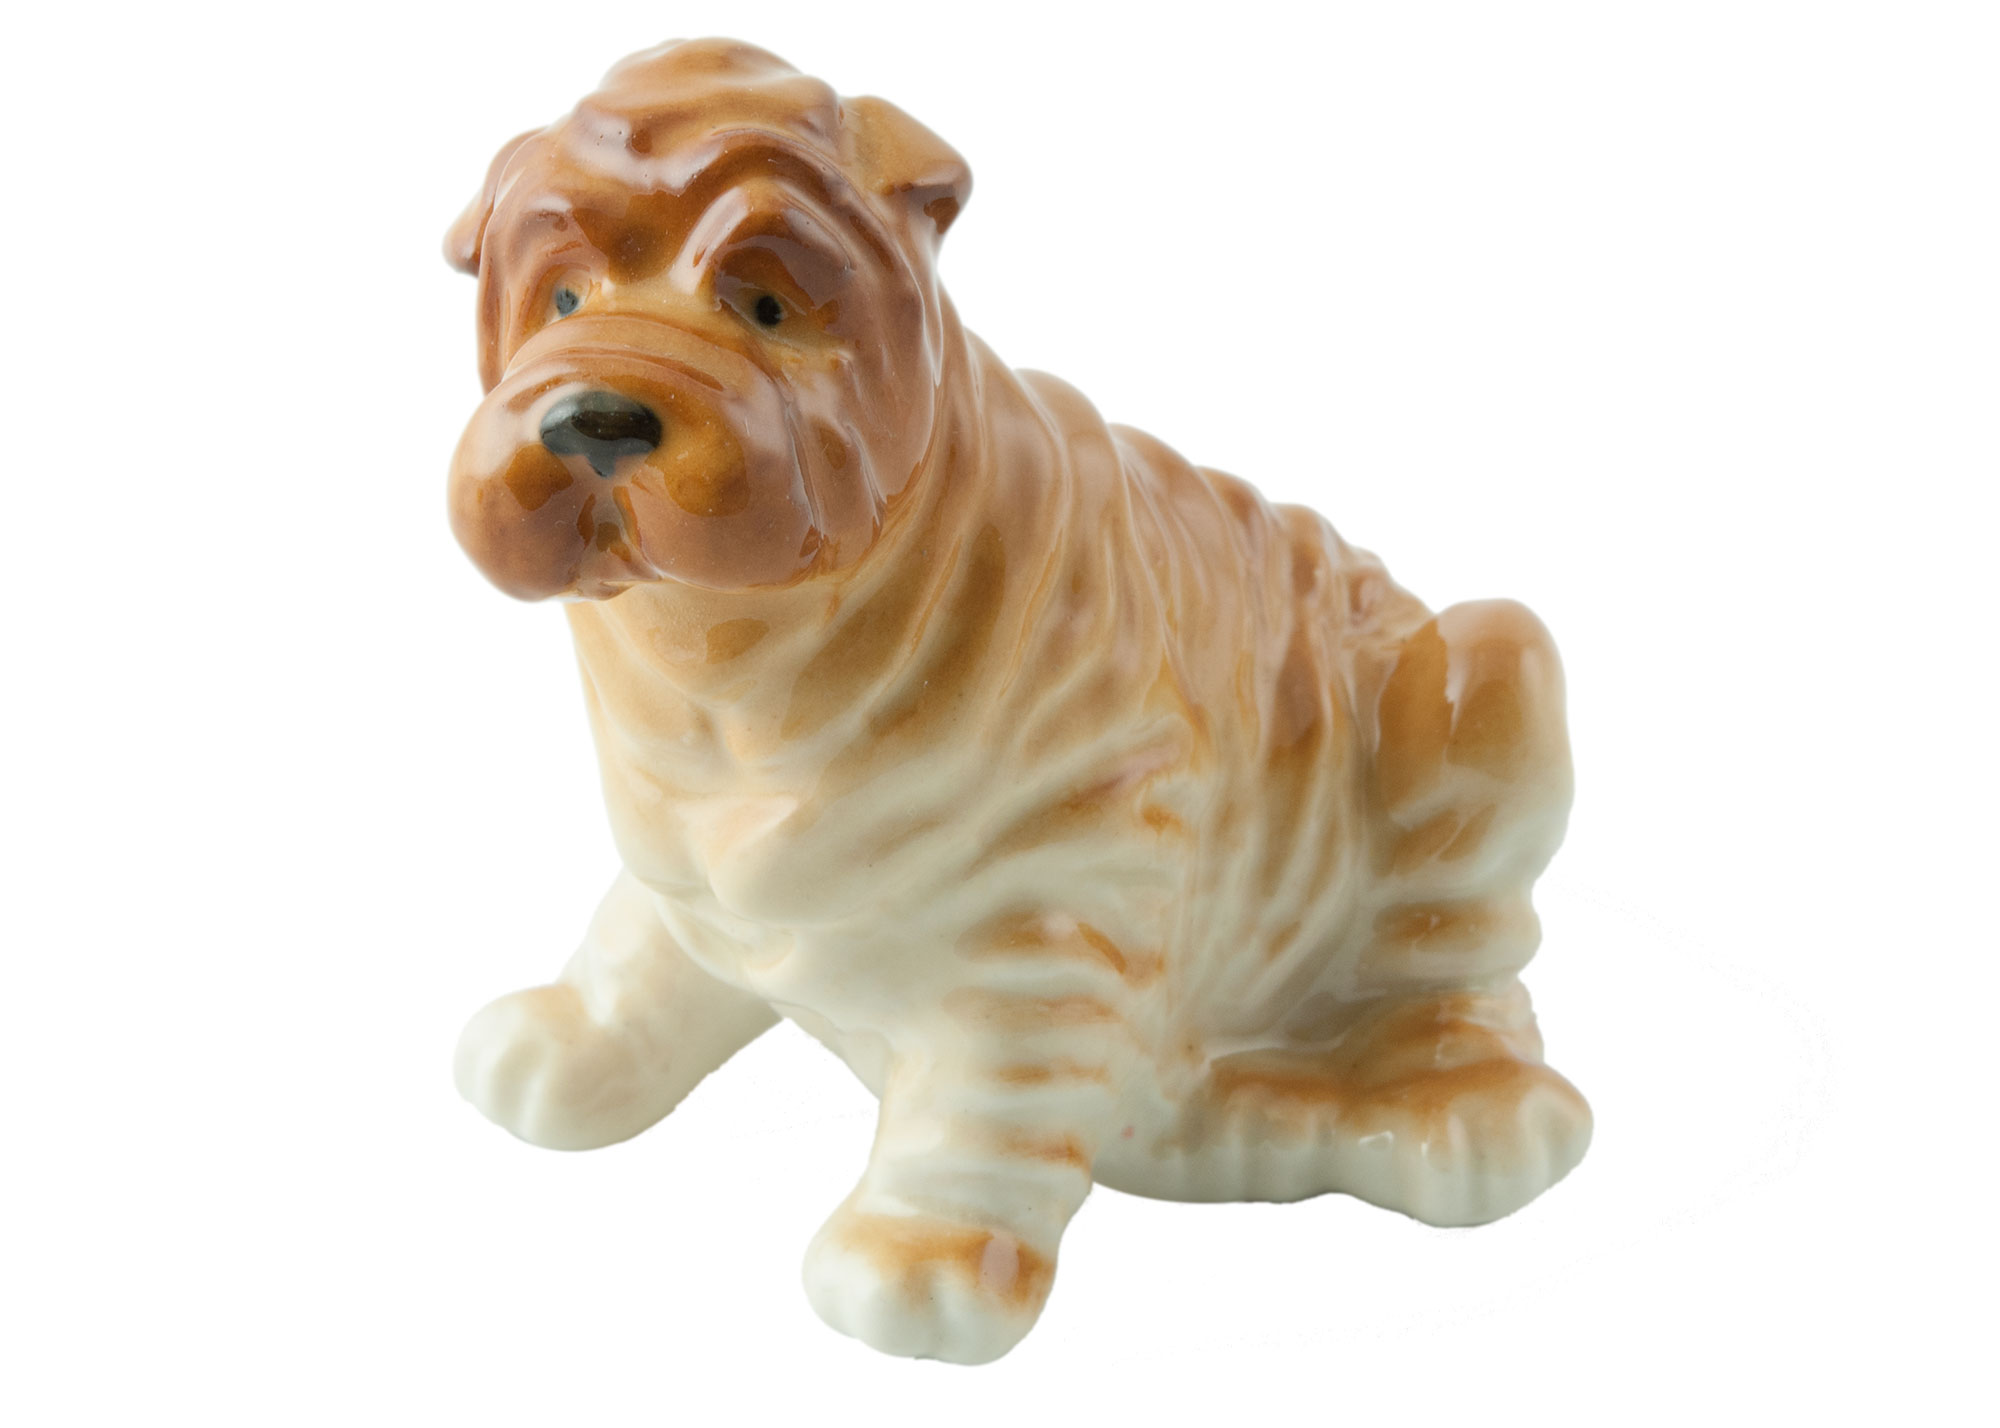 Buy Shar-Pei Porcelain Figurine at GoldenCockerel.com